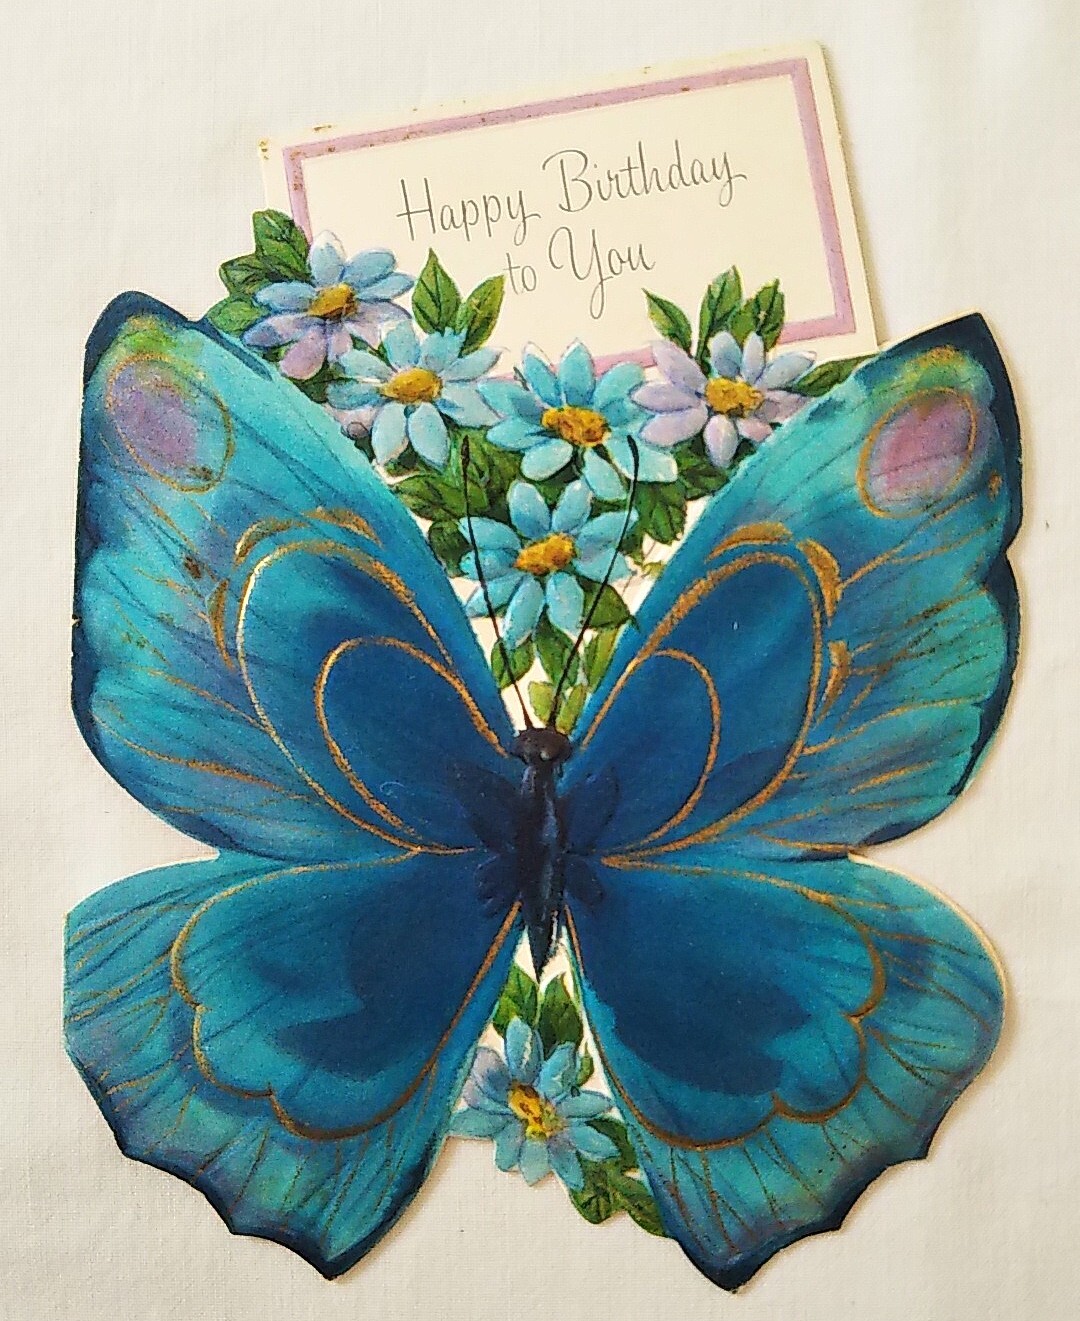 Vintage Birthday Card 青い蝶と花 バースデイカード 1960 70年 Greeting Card グリーティングカード バースデーカード Linus Blanket